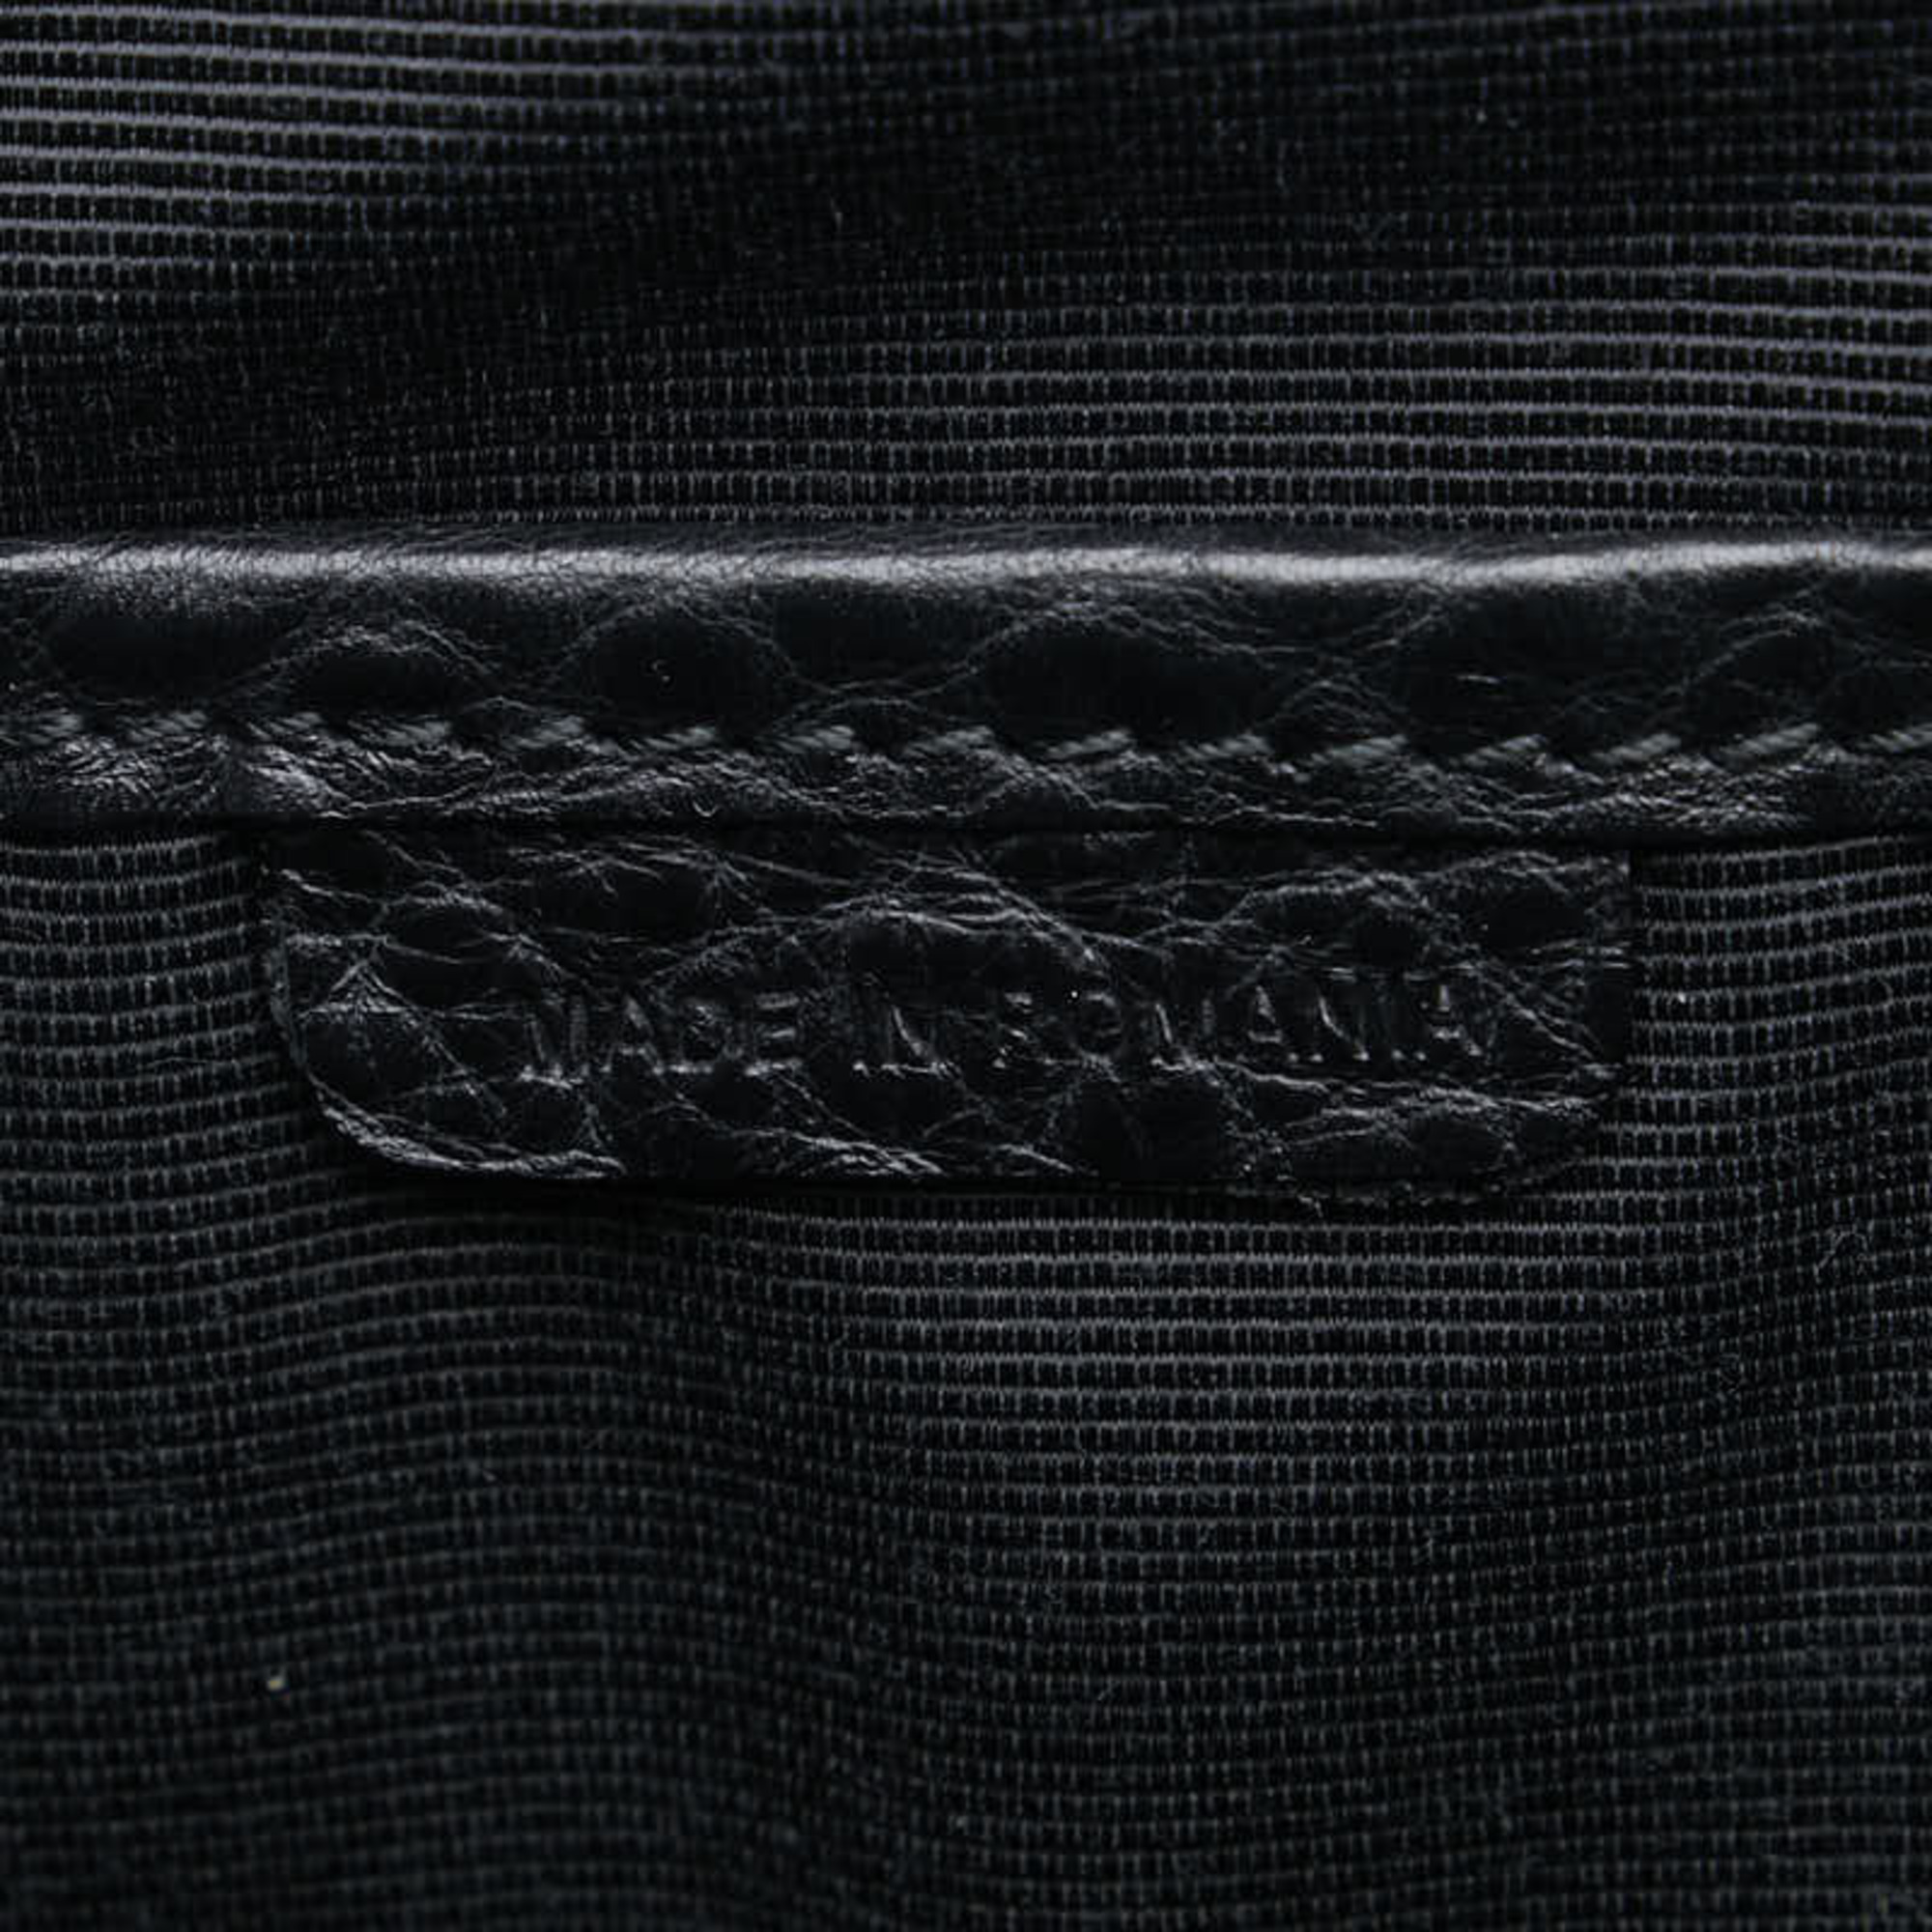 Burberry Handbag Shoulder Bag Black Leather Women's BURBERRY